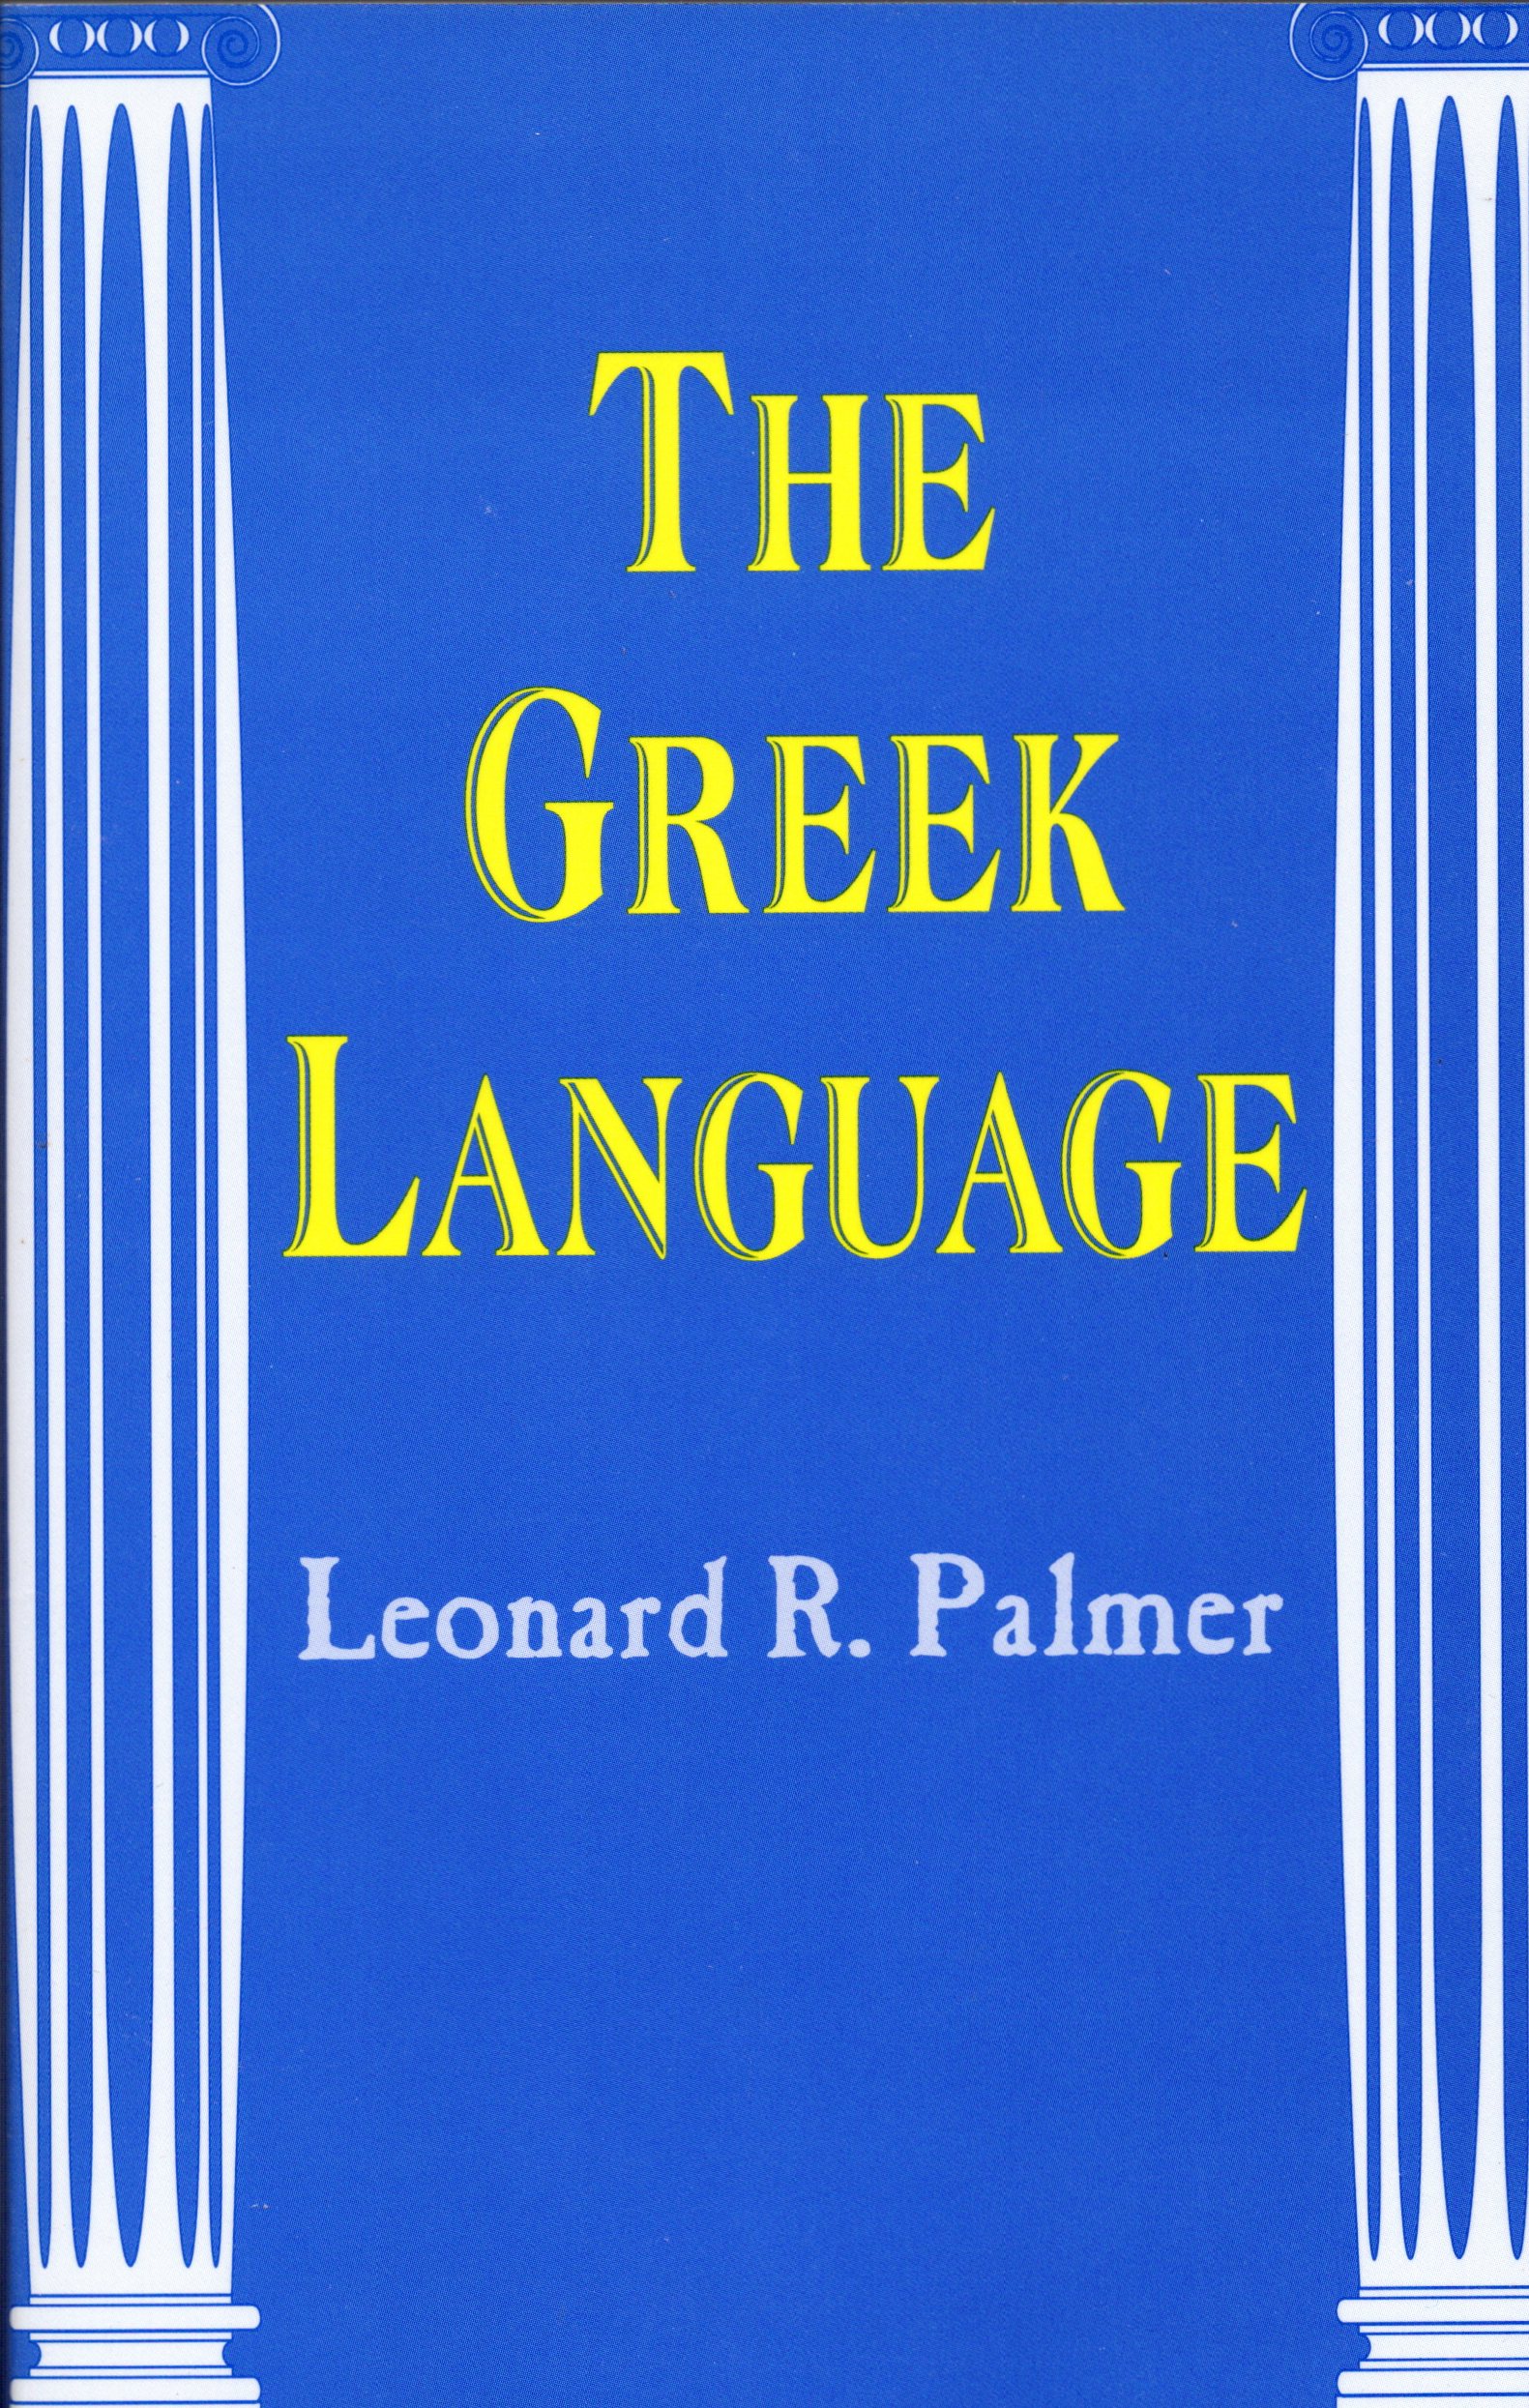 The Greek Language: Leonard Robert Palmer: 9780806128443: : Books